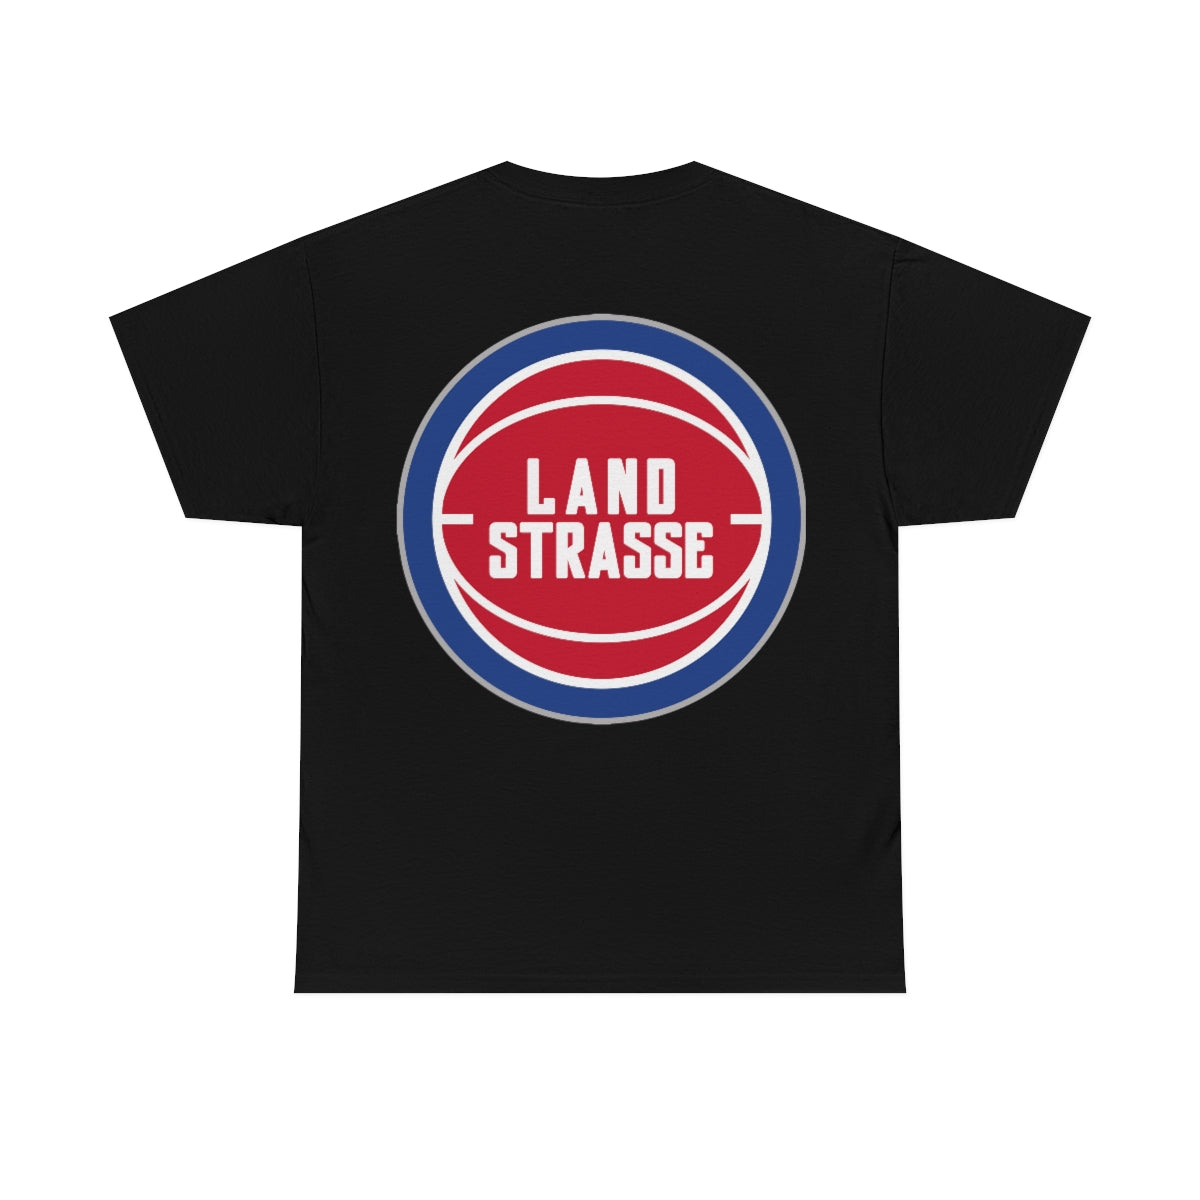 Hoodz T-shirt - 1030 Landstrasse